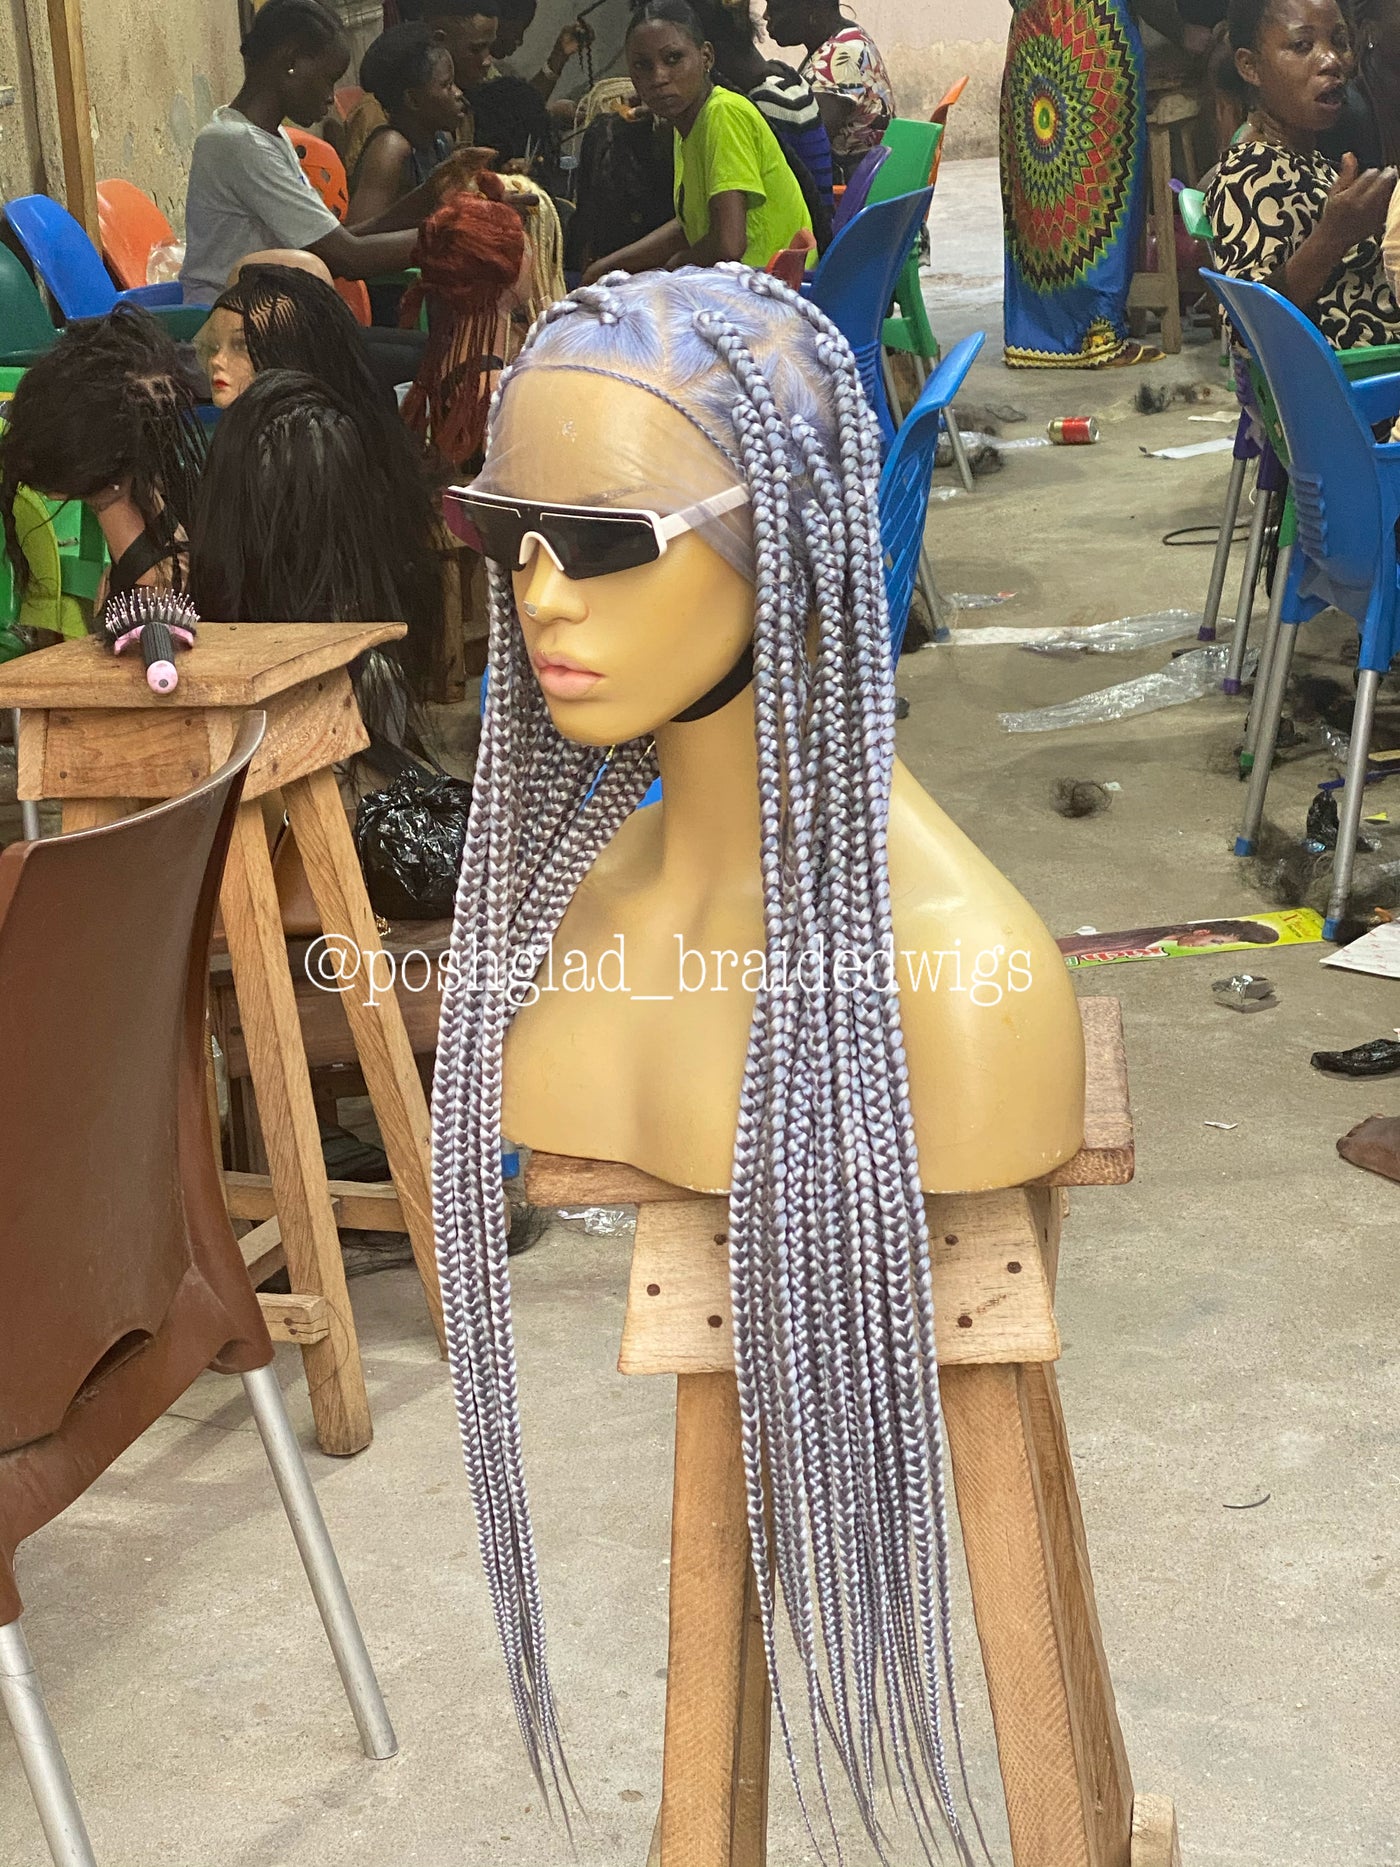 Jumbo Knotless Braid Wig - Gray Color - Vera Poshglad Braided Wigs